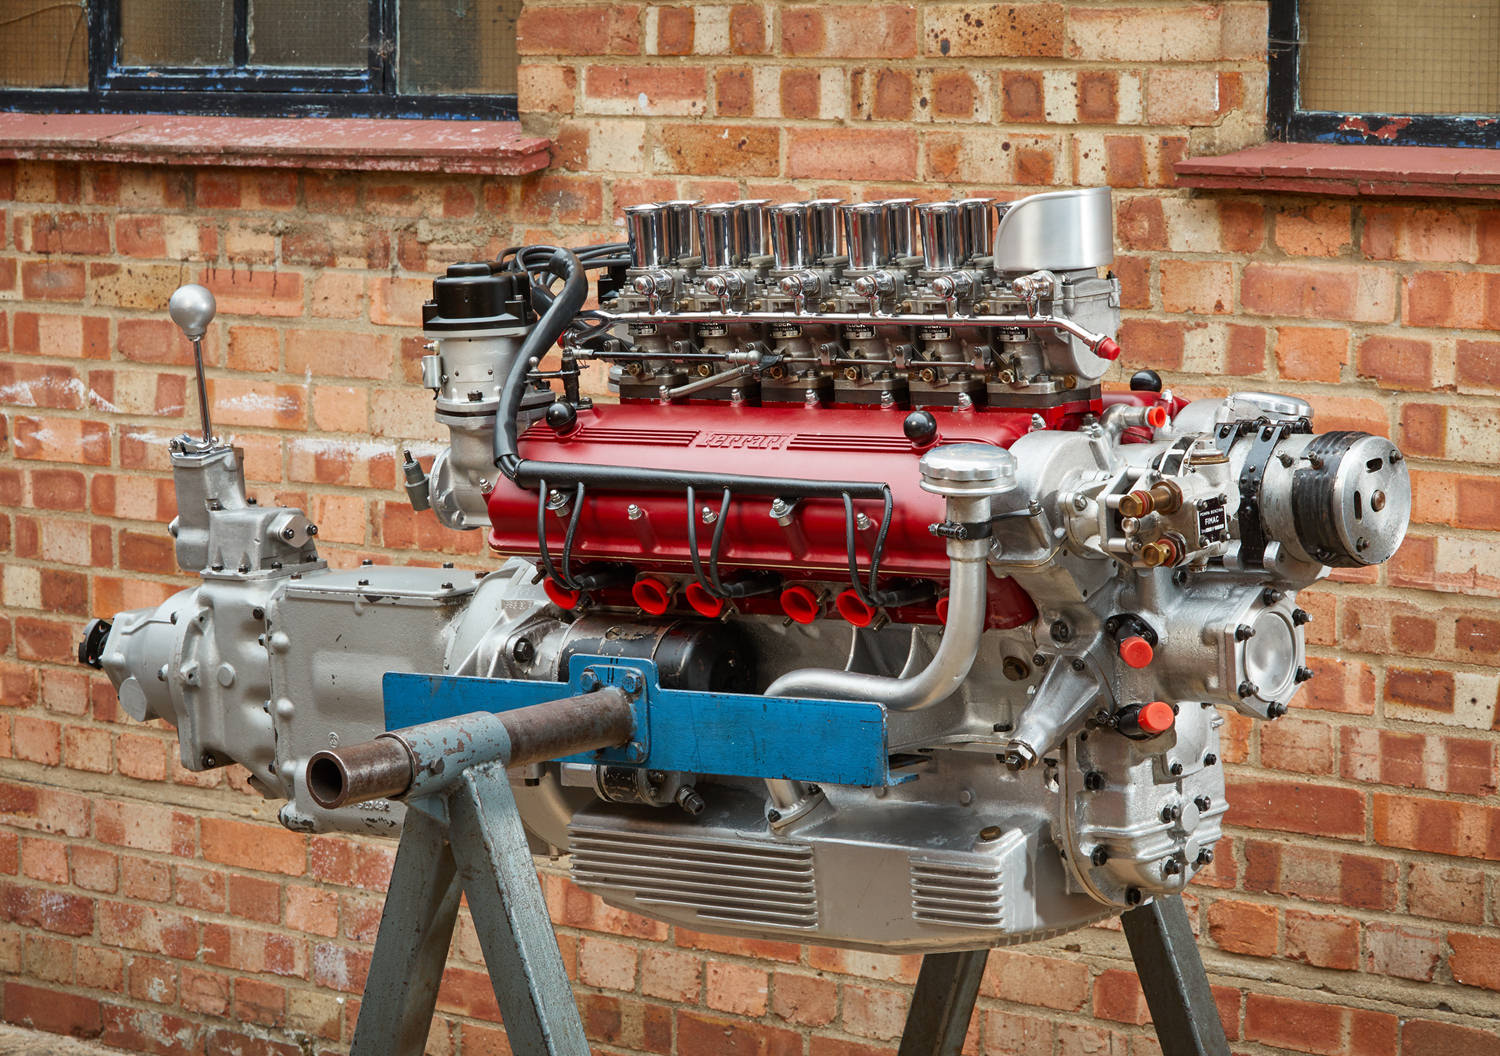 Ferrari 250 GT V12 Engine + Gearbox For Sale